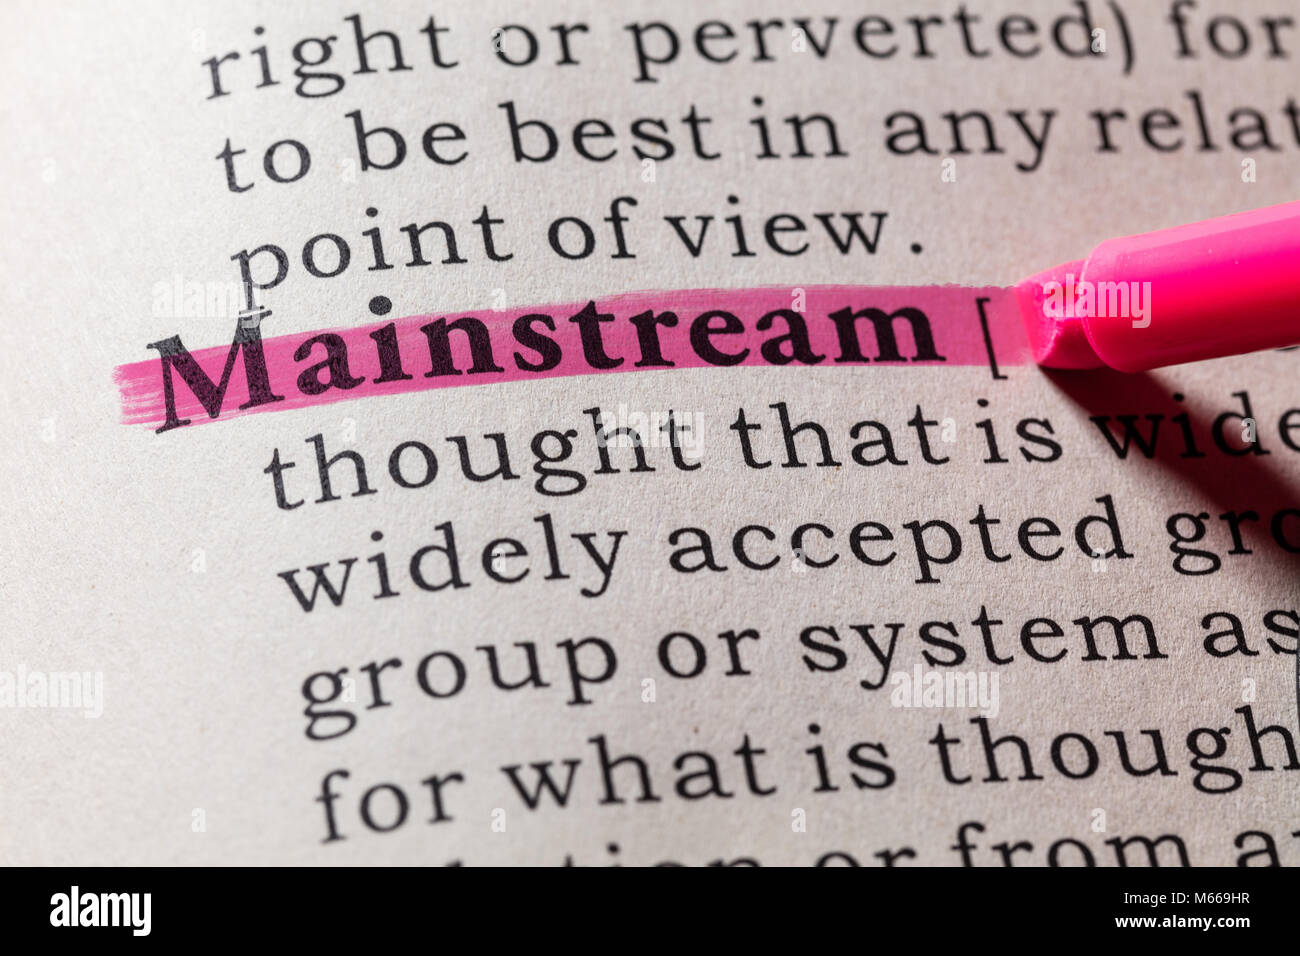 Fake Dictionary, Dictionary definition of the word mainstream. including key descriptive words. Stock Photo